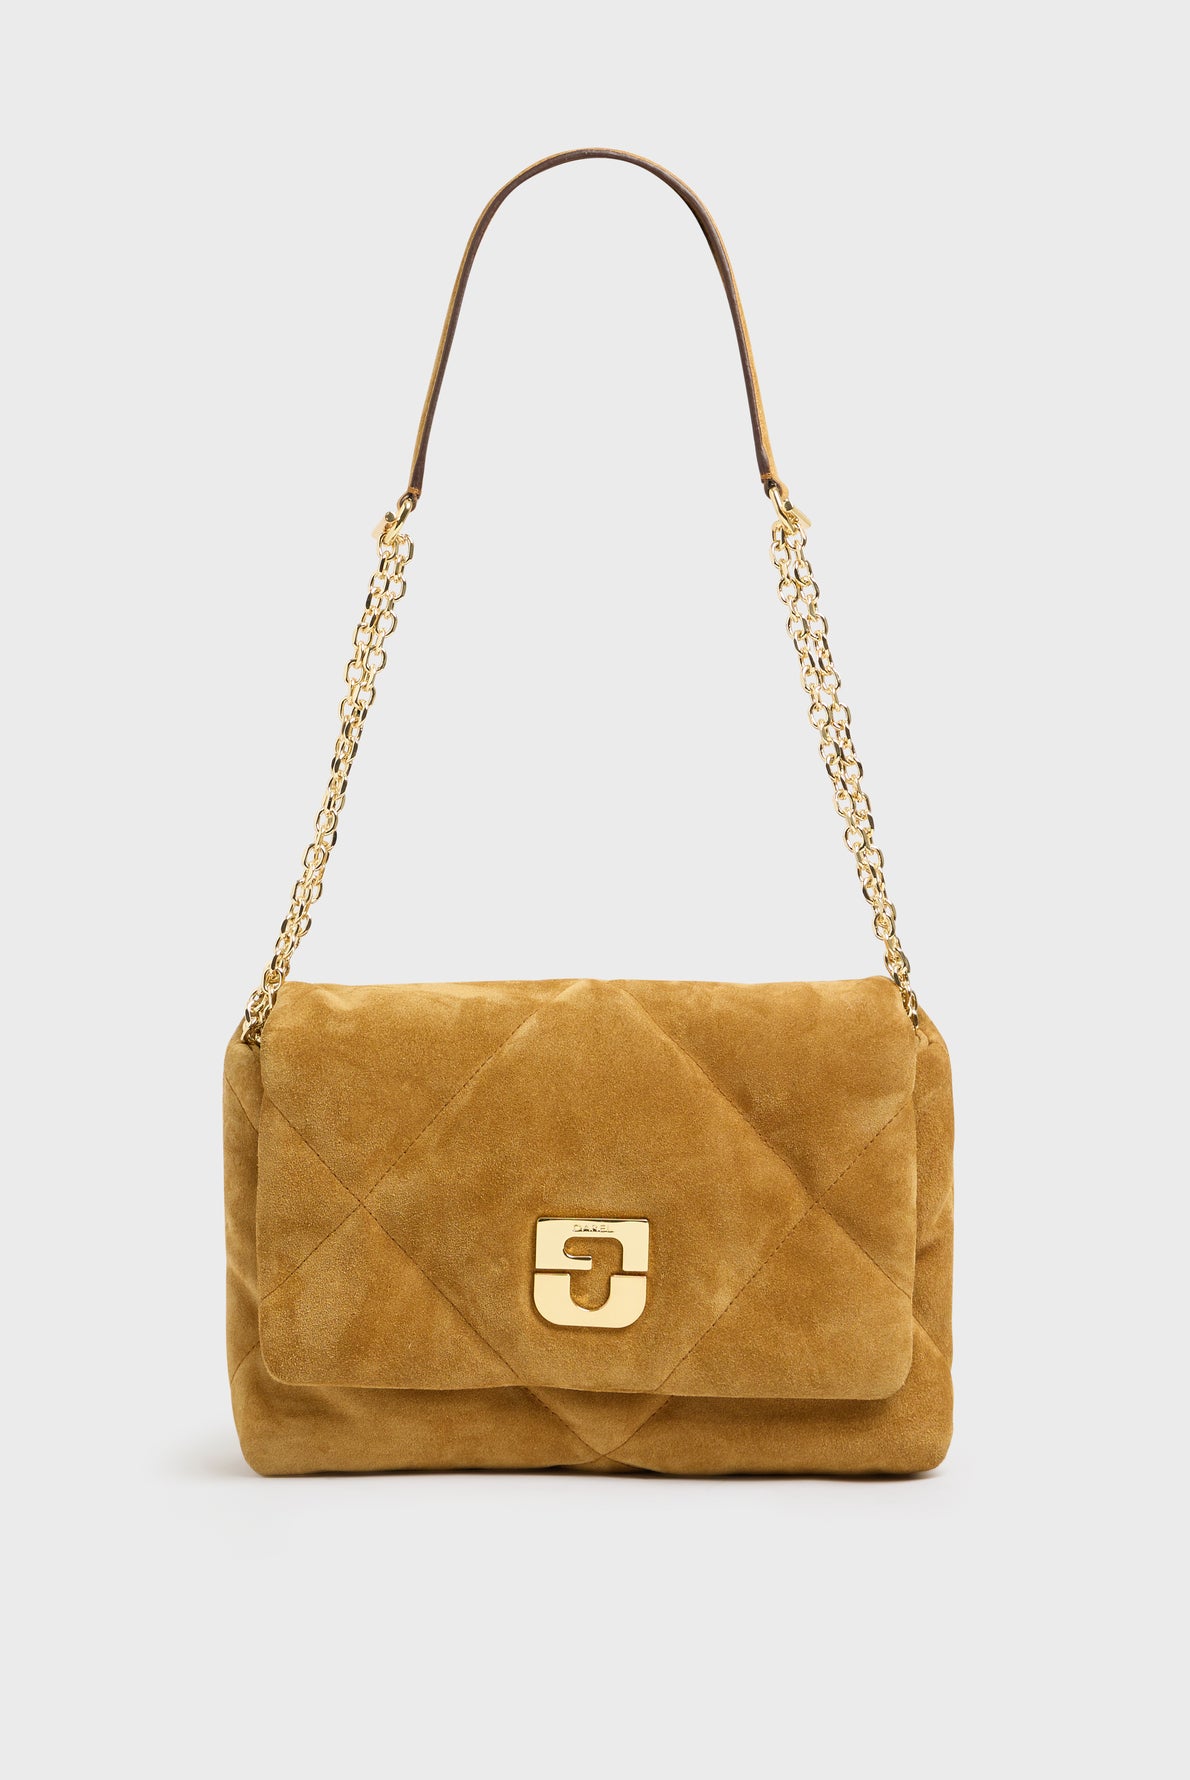 Gerard Darel Shopping Bags for Spring - PurseBlog